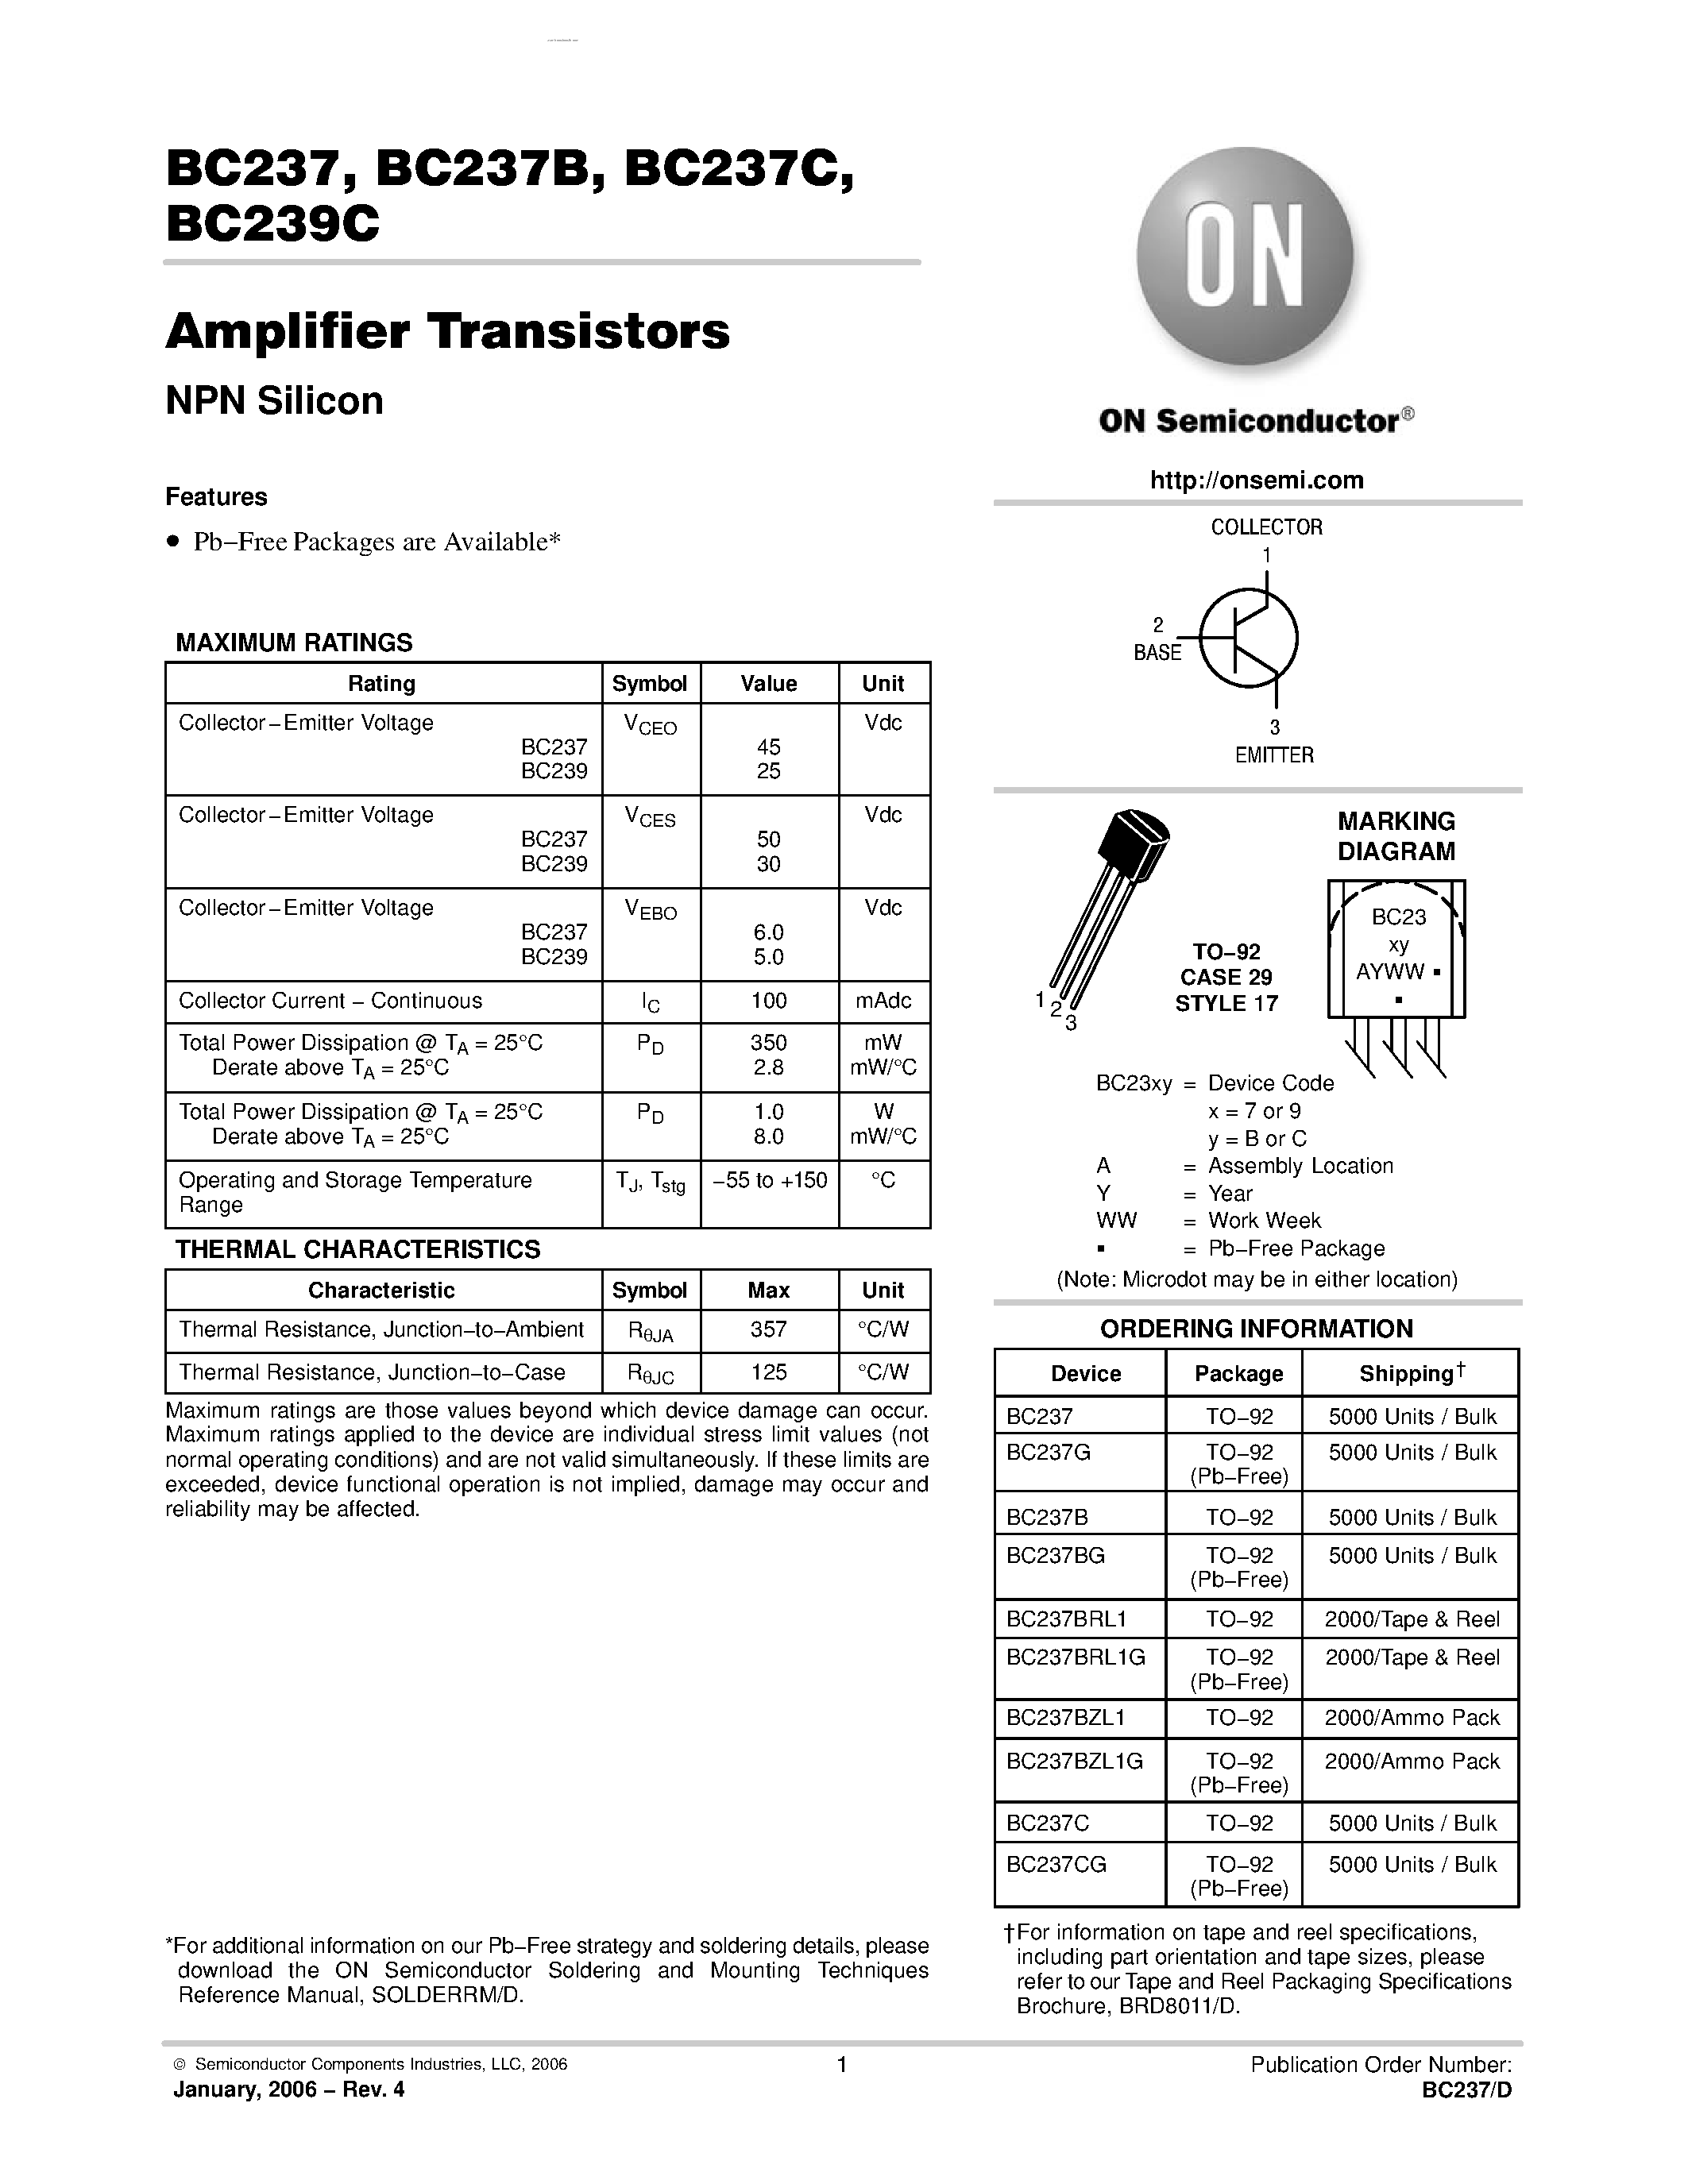 Даташит BC237B - Amplifier Transistors(NPN Silicon) страница 1